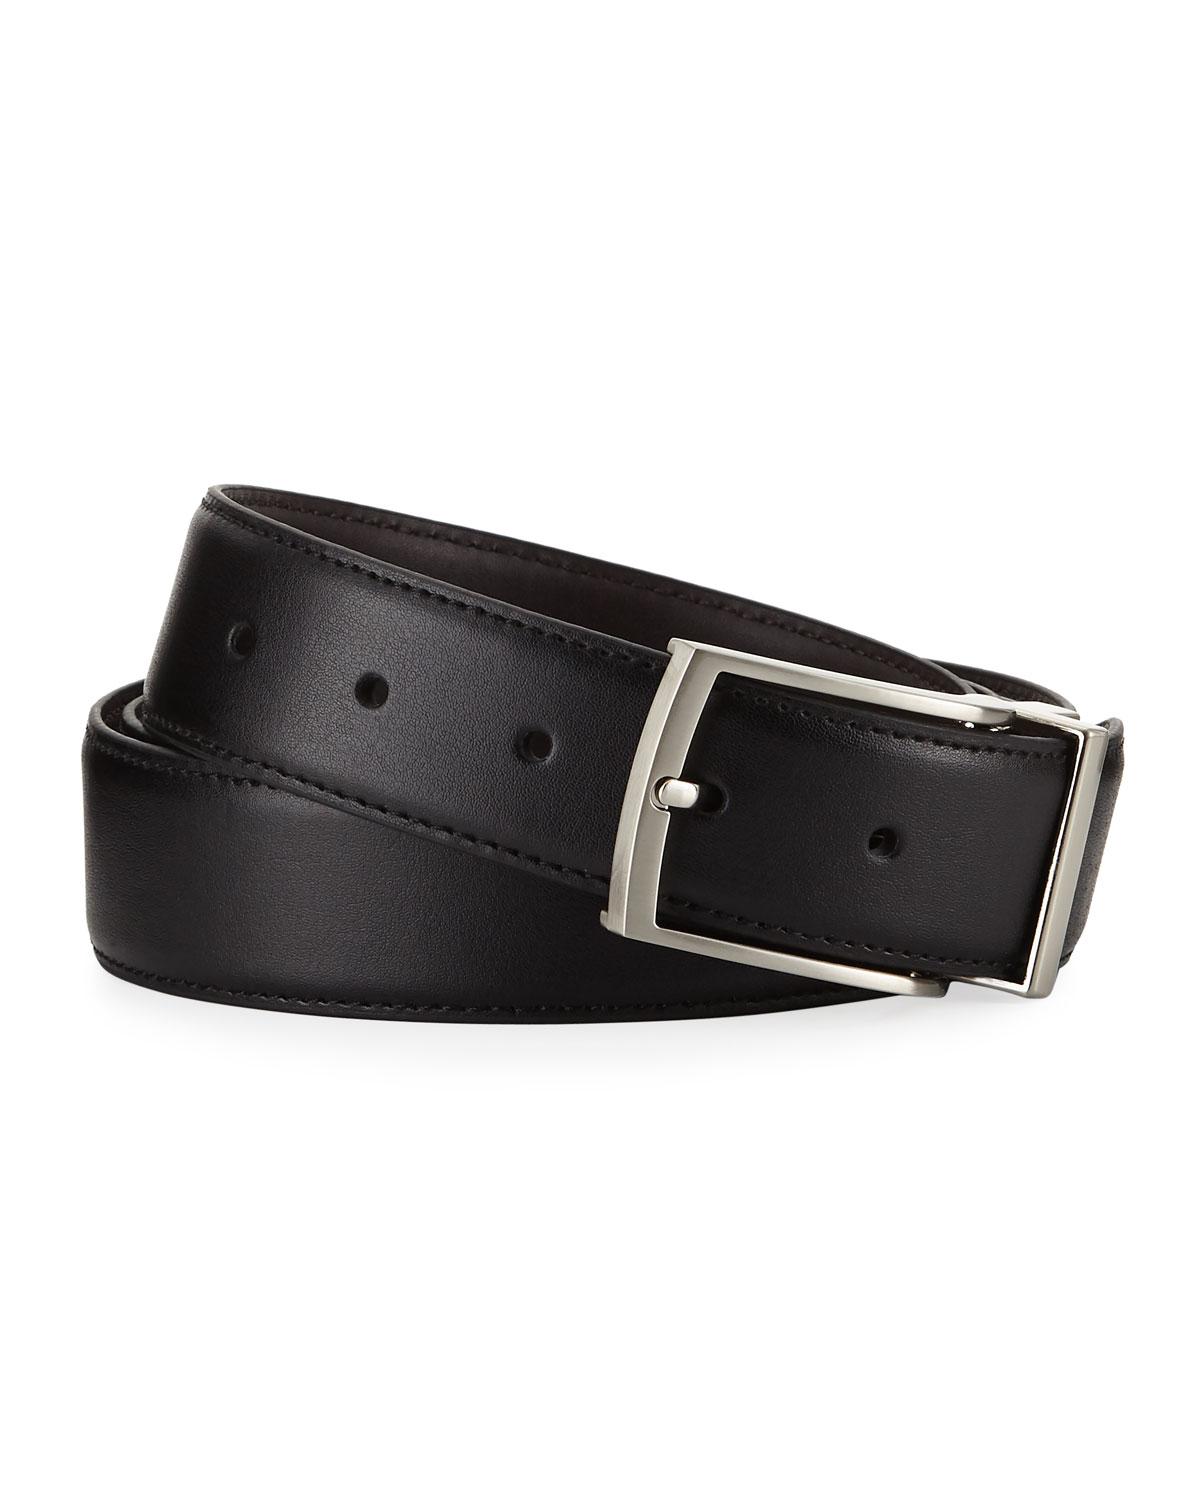 Nike Reversible Leather Belt in Black/Brown (Black) for Men - Lyst